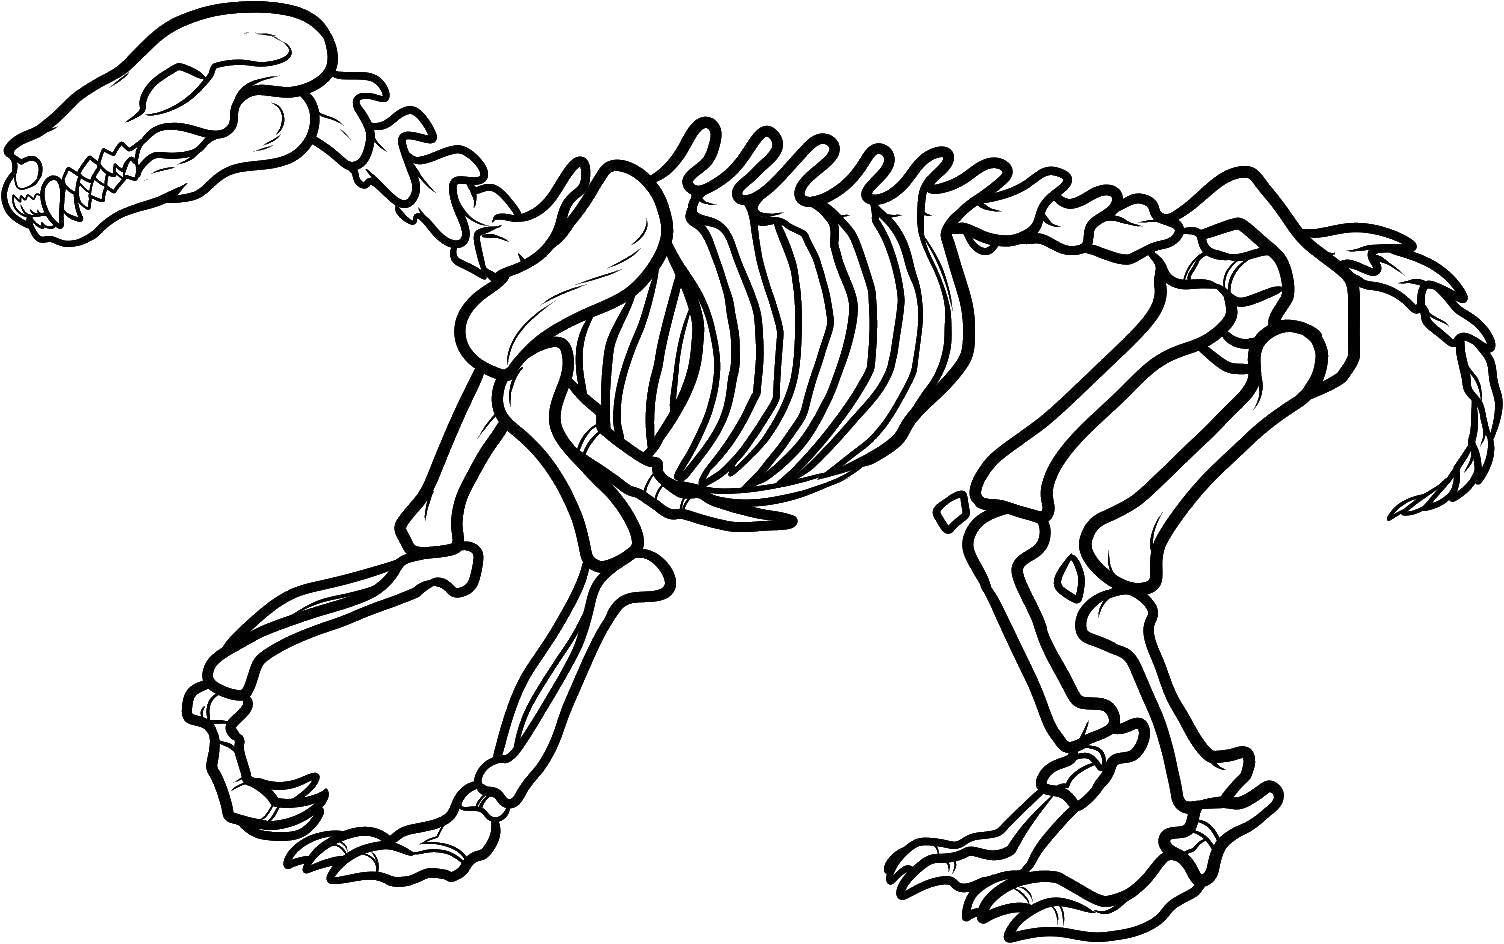 Coloring Skeleton. Category dinosaur. Tags:  Dinosaurs.